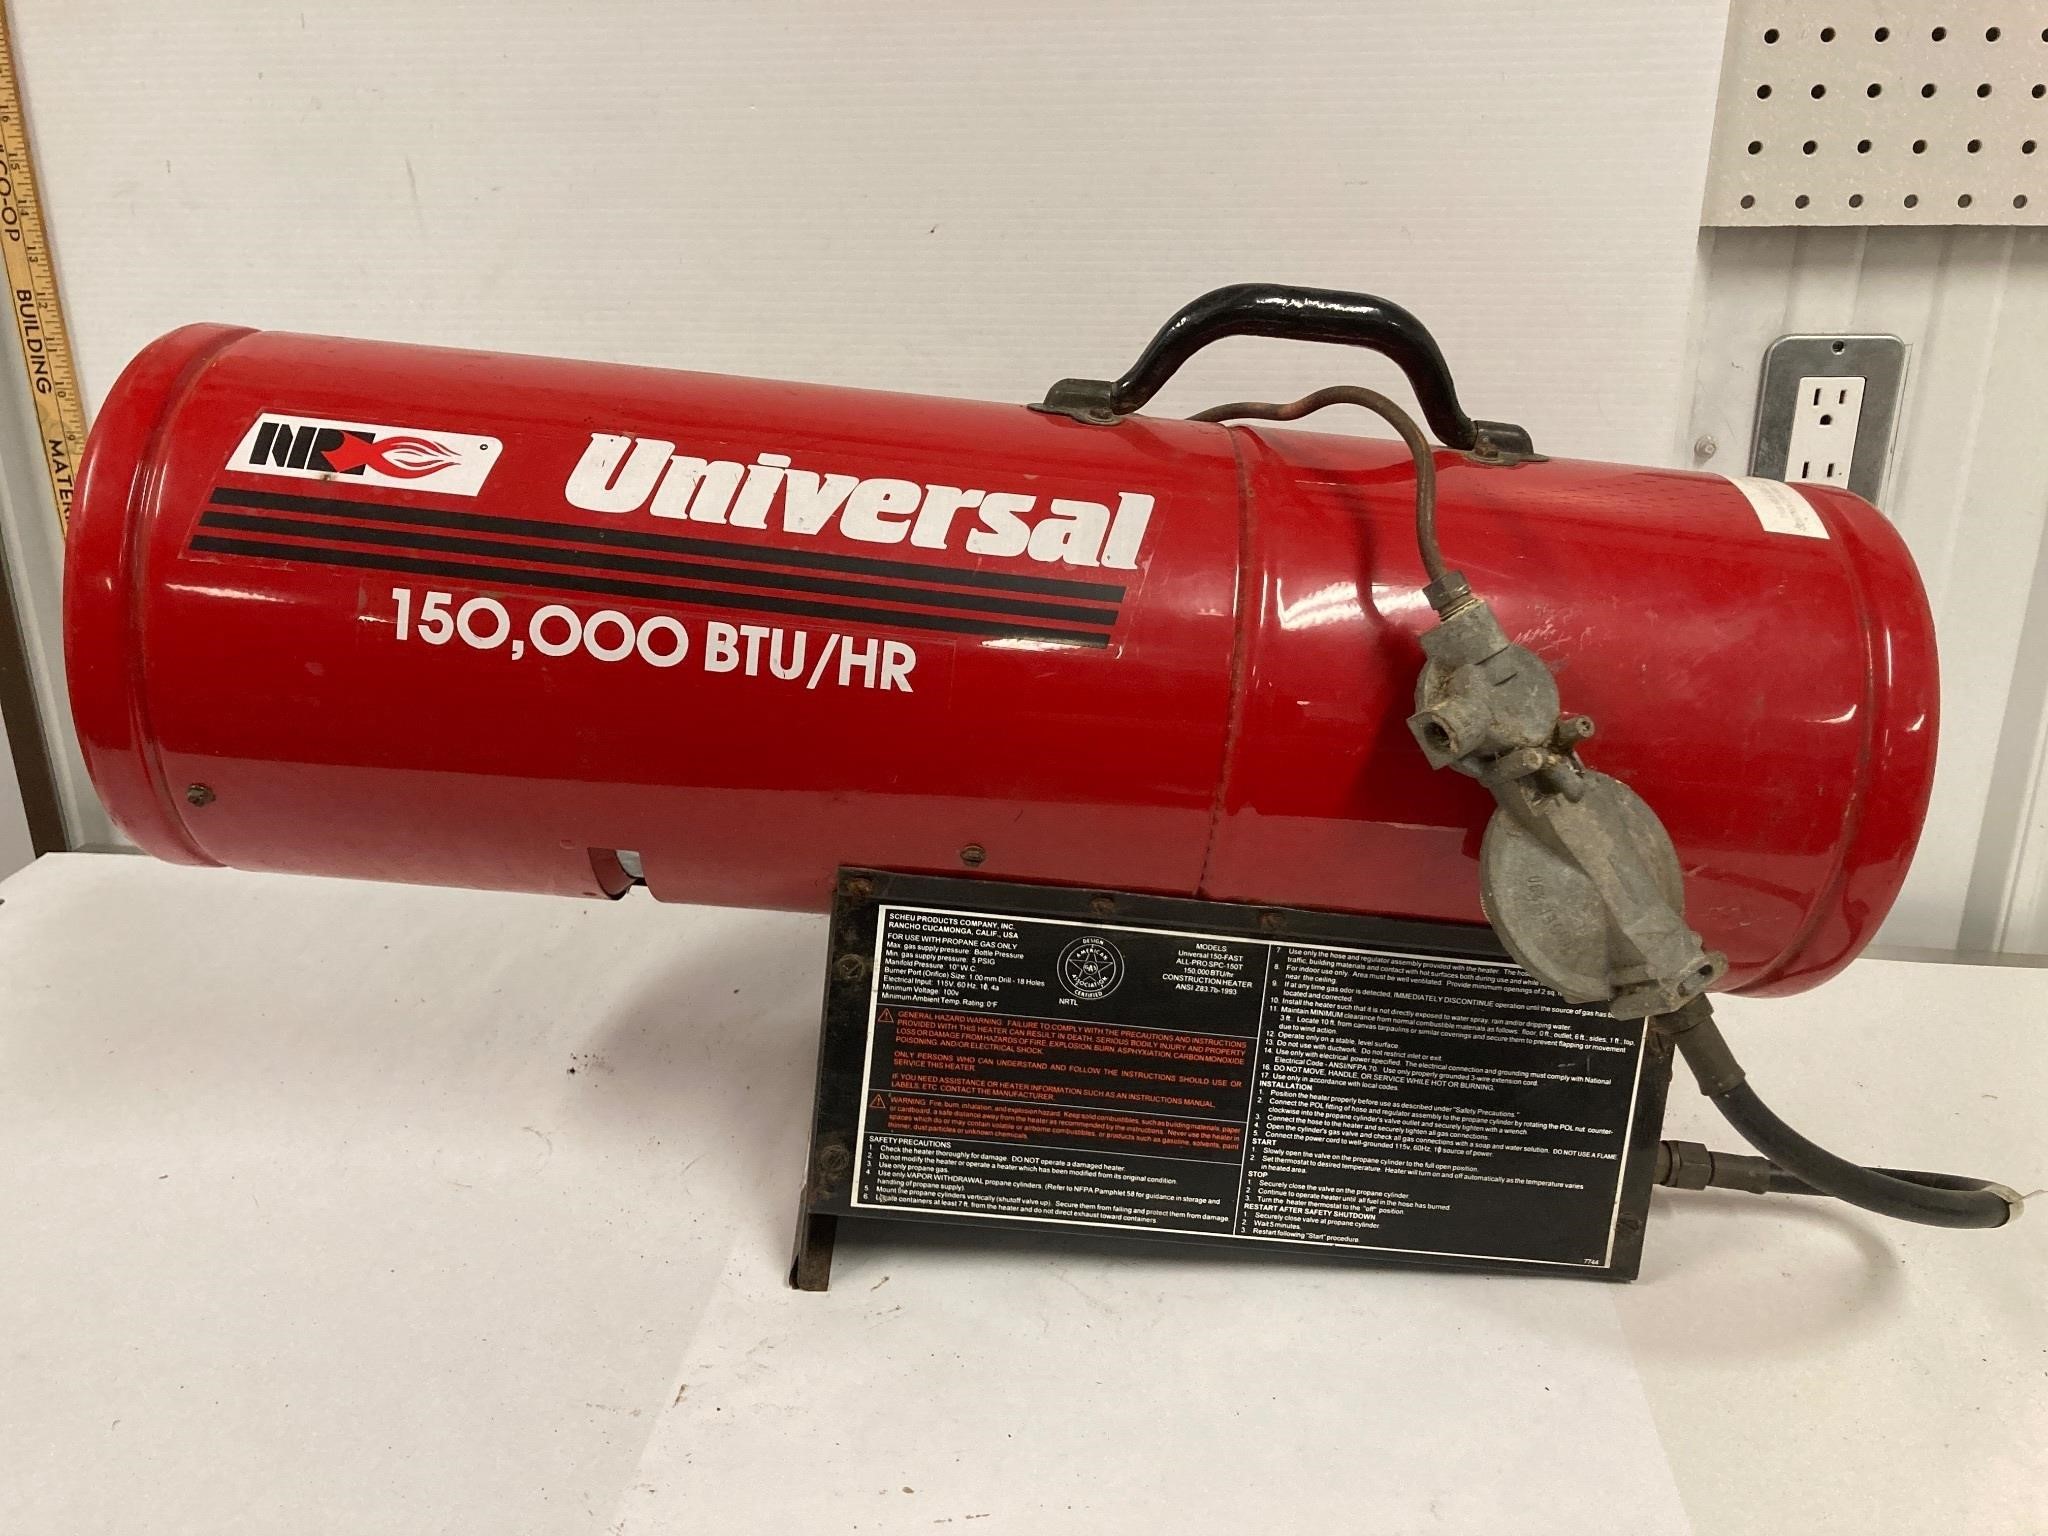 Universal 150,000 BTU propane heater.